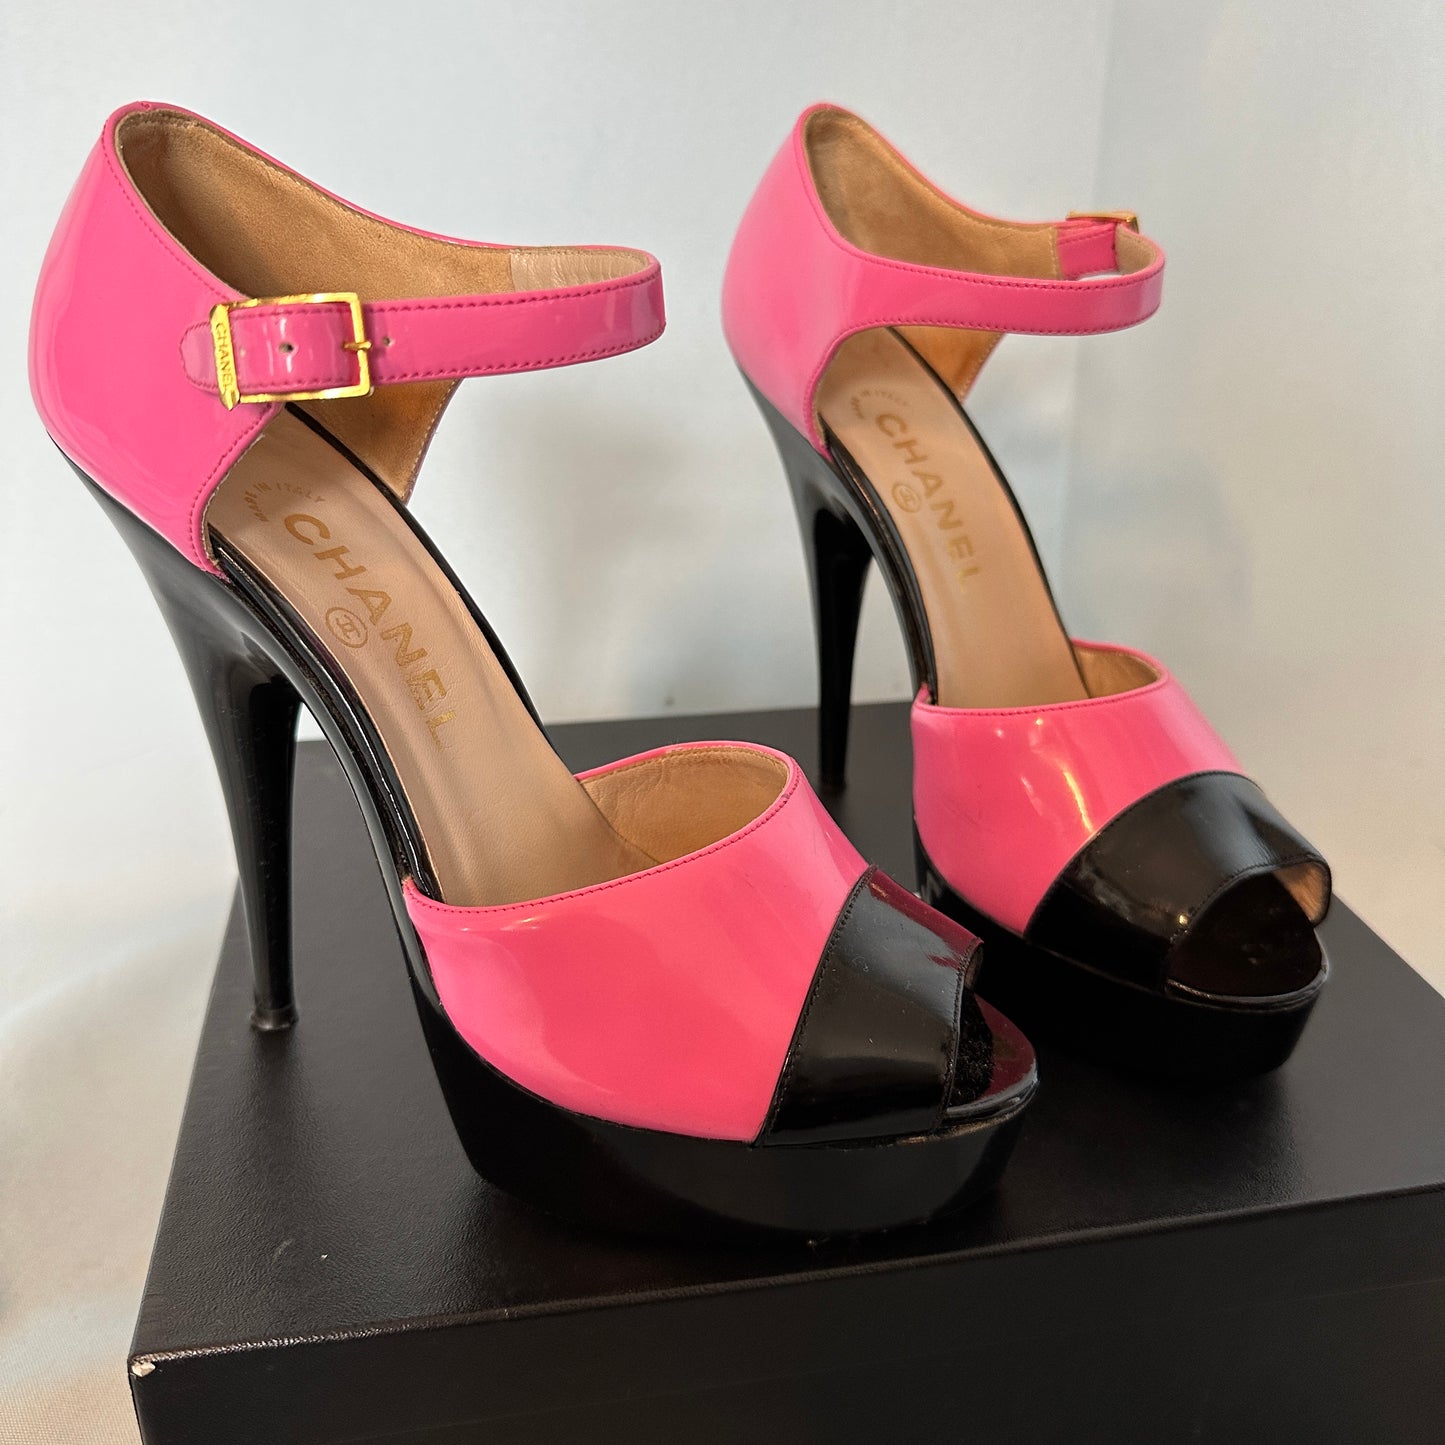 Chanel Spring 1995 Runway Pink Patent Heels